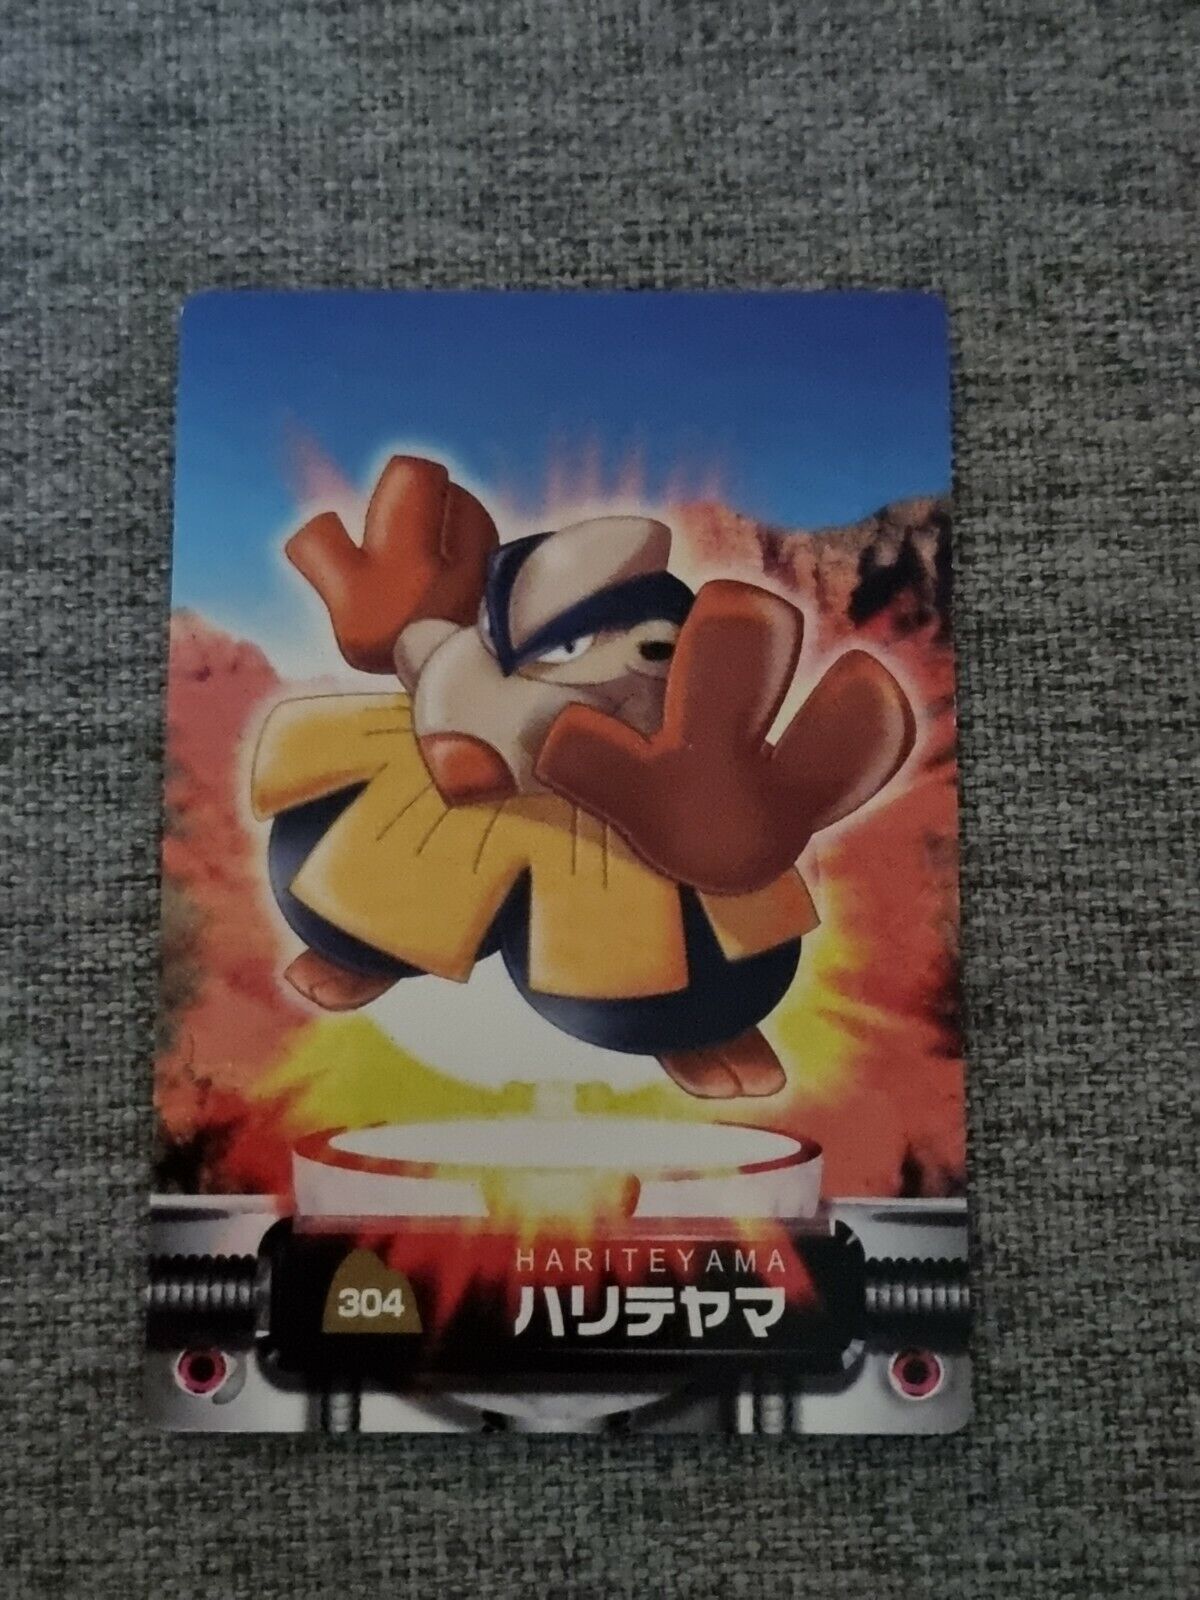 Japanese Hariyama Zukan Pokemon Card Bandai Carddass Vintage Pocket Monsters